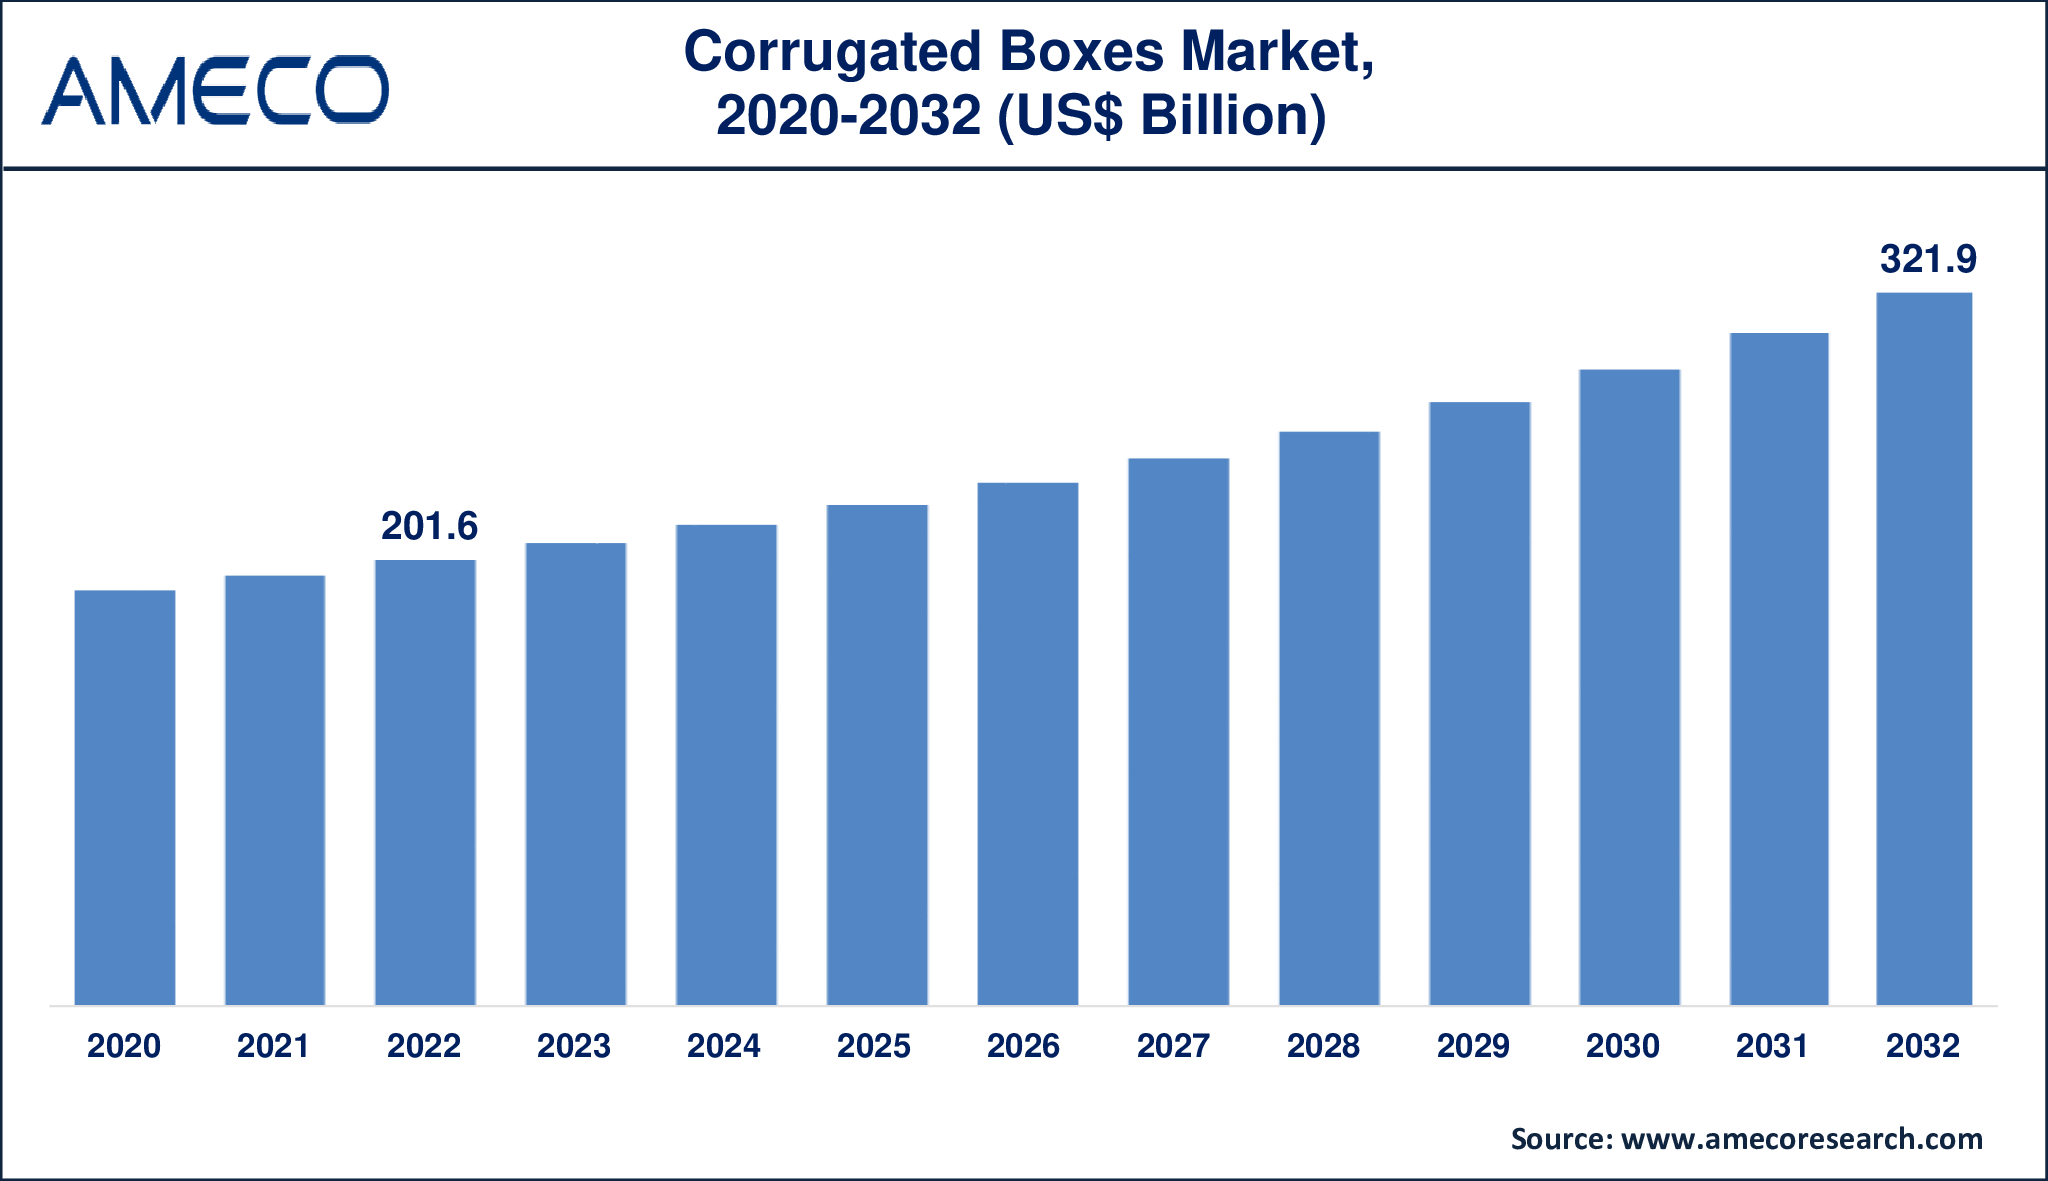 Corrugated Boxes Market Dynamics